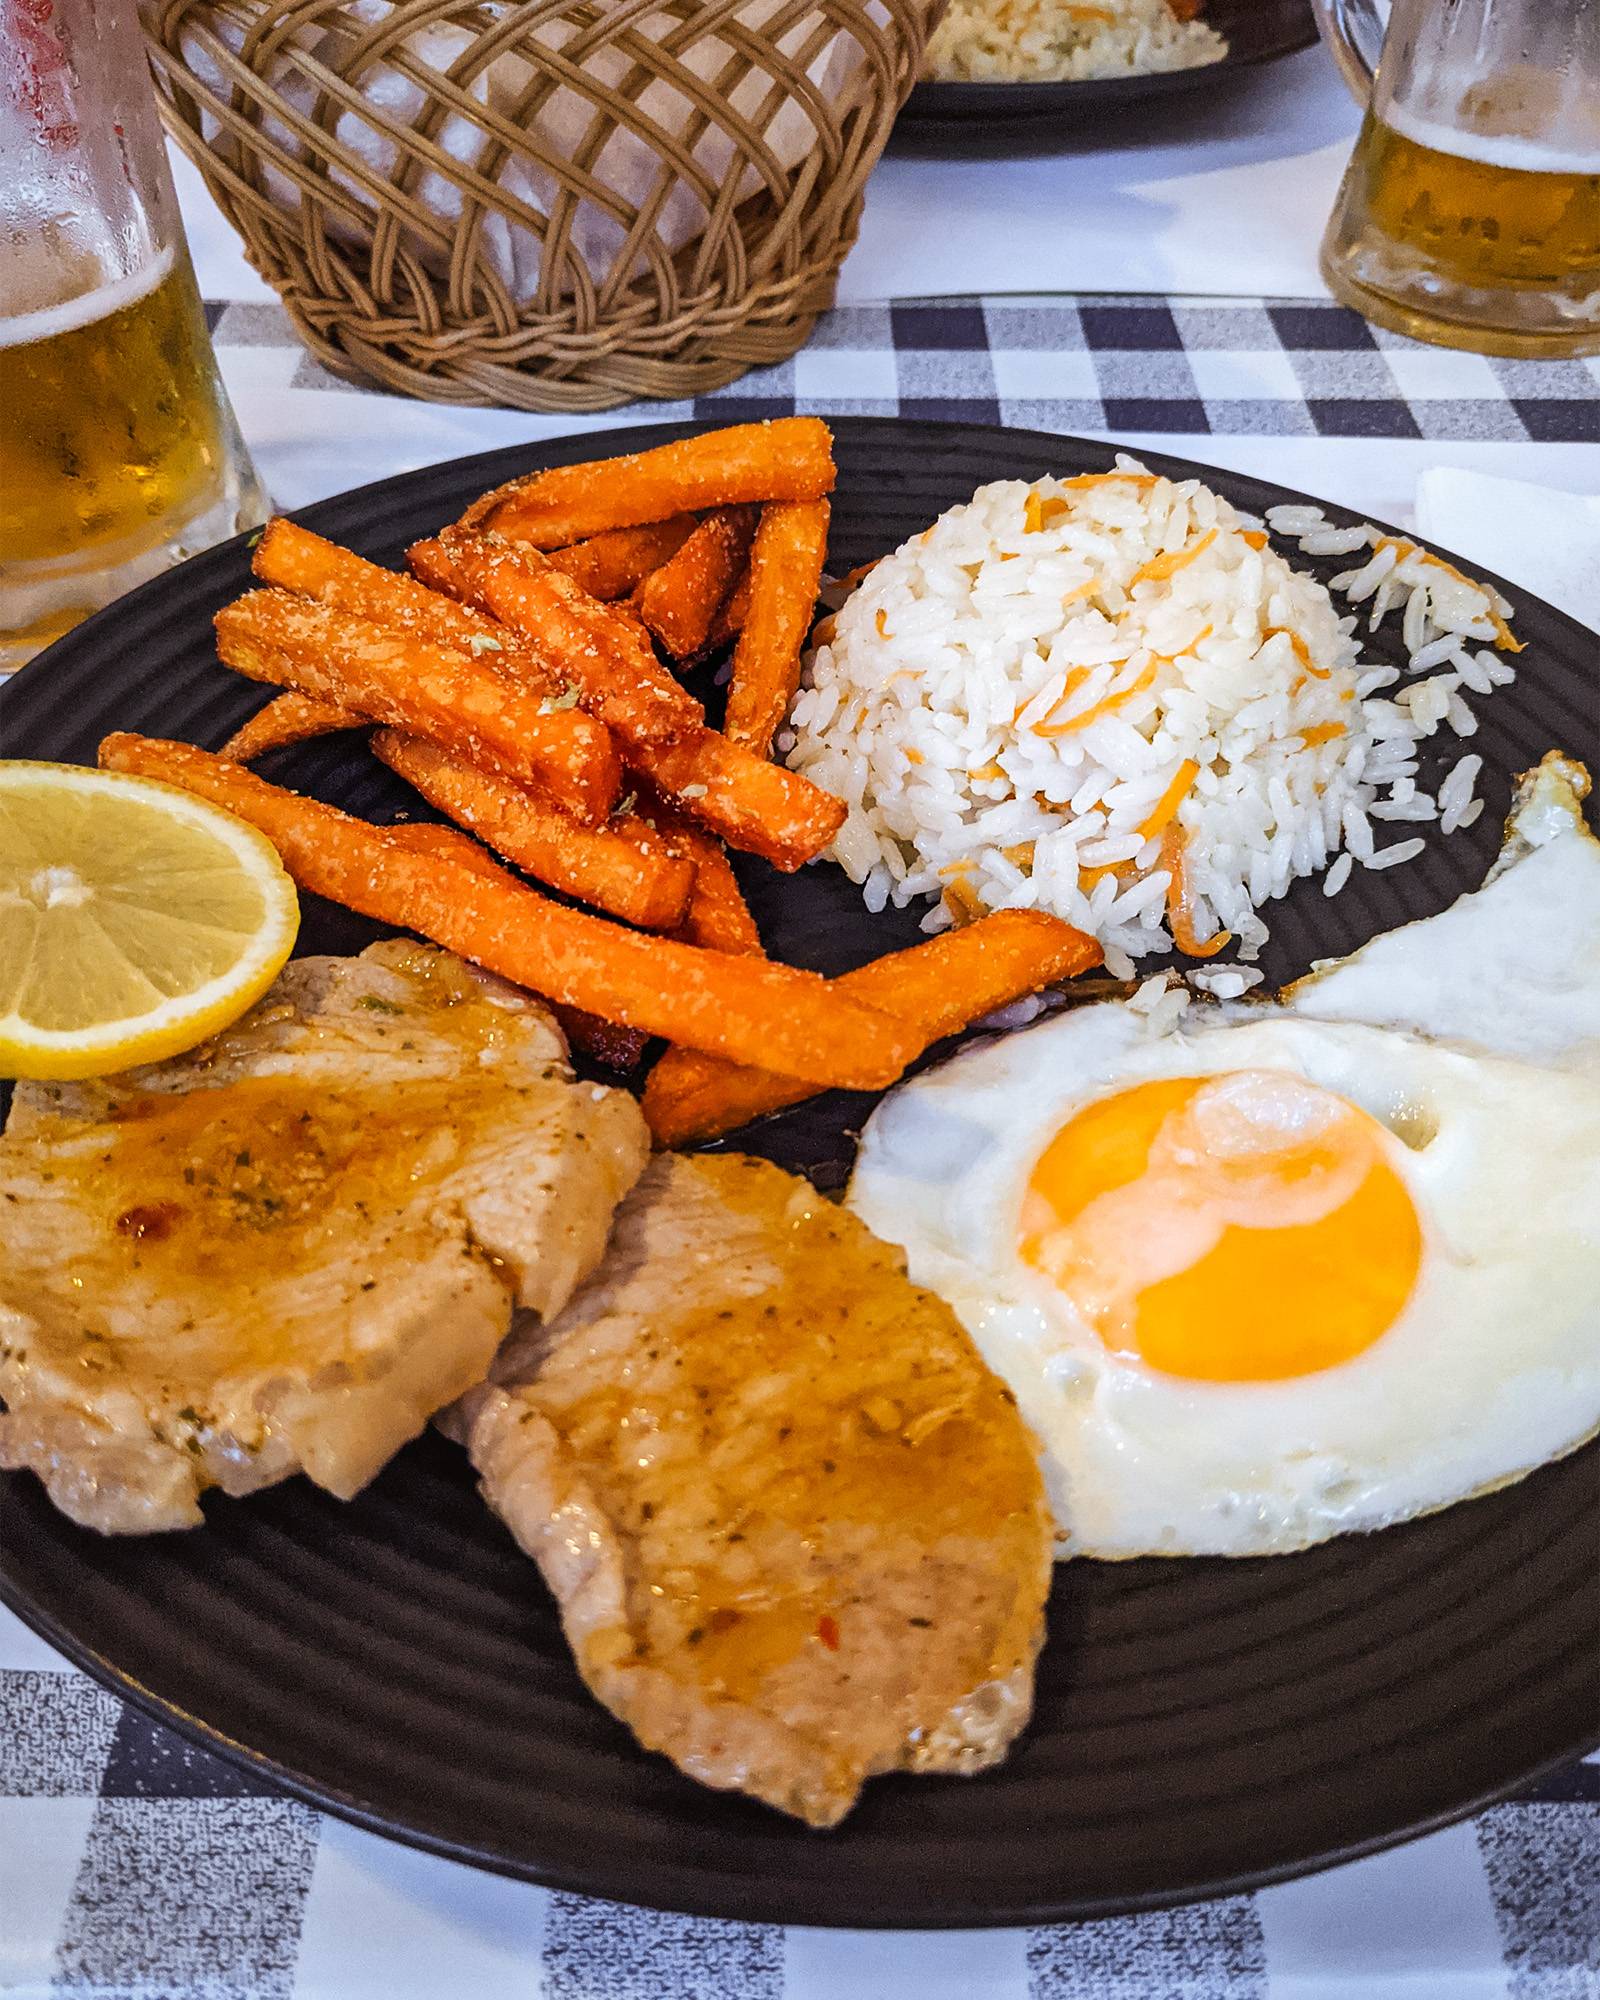 A dinner on the Portuguese Camino de Santiago of rice, sweet potato fries, pork, and an egg